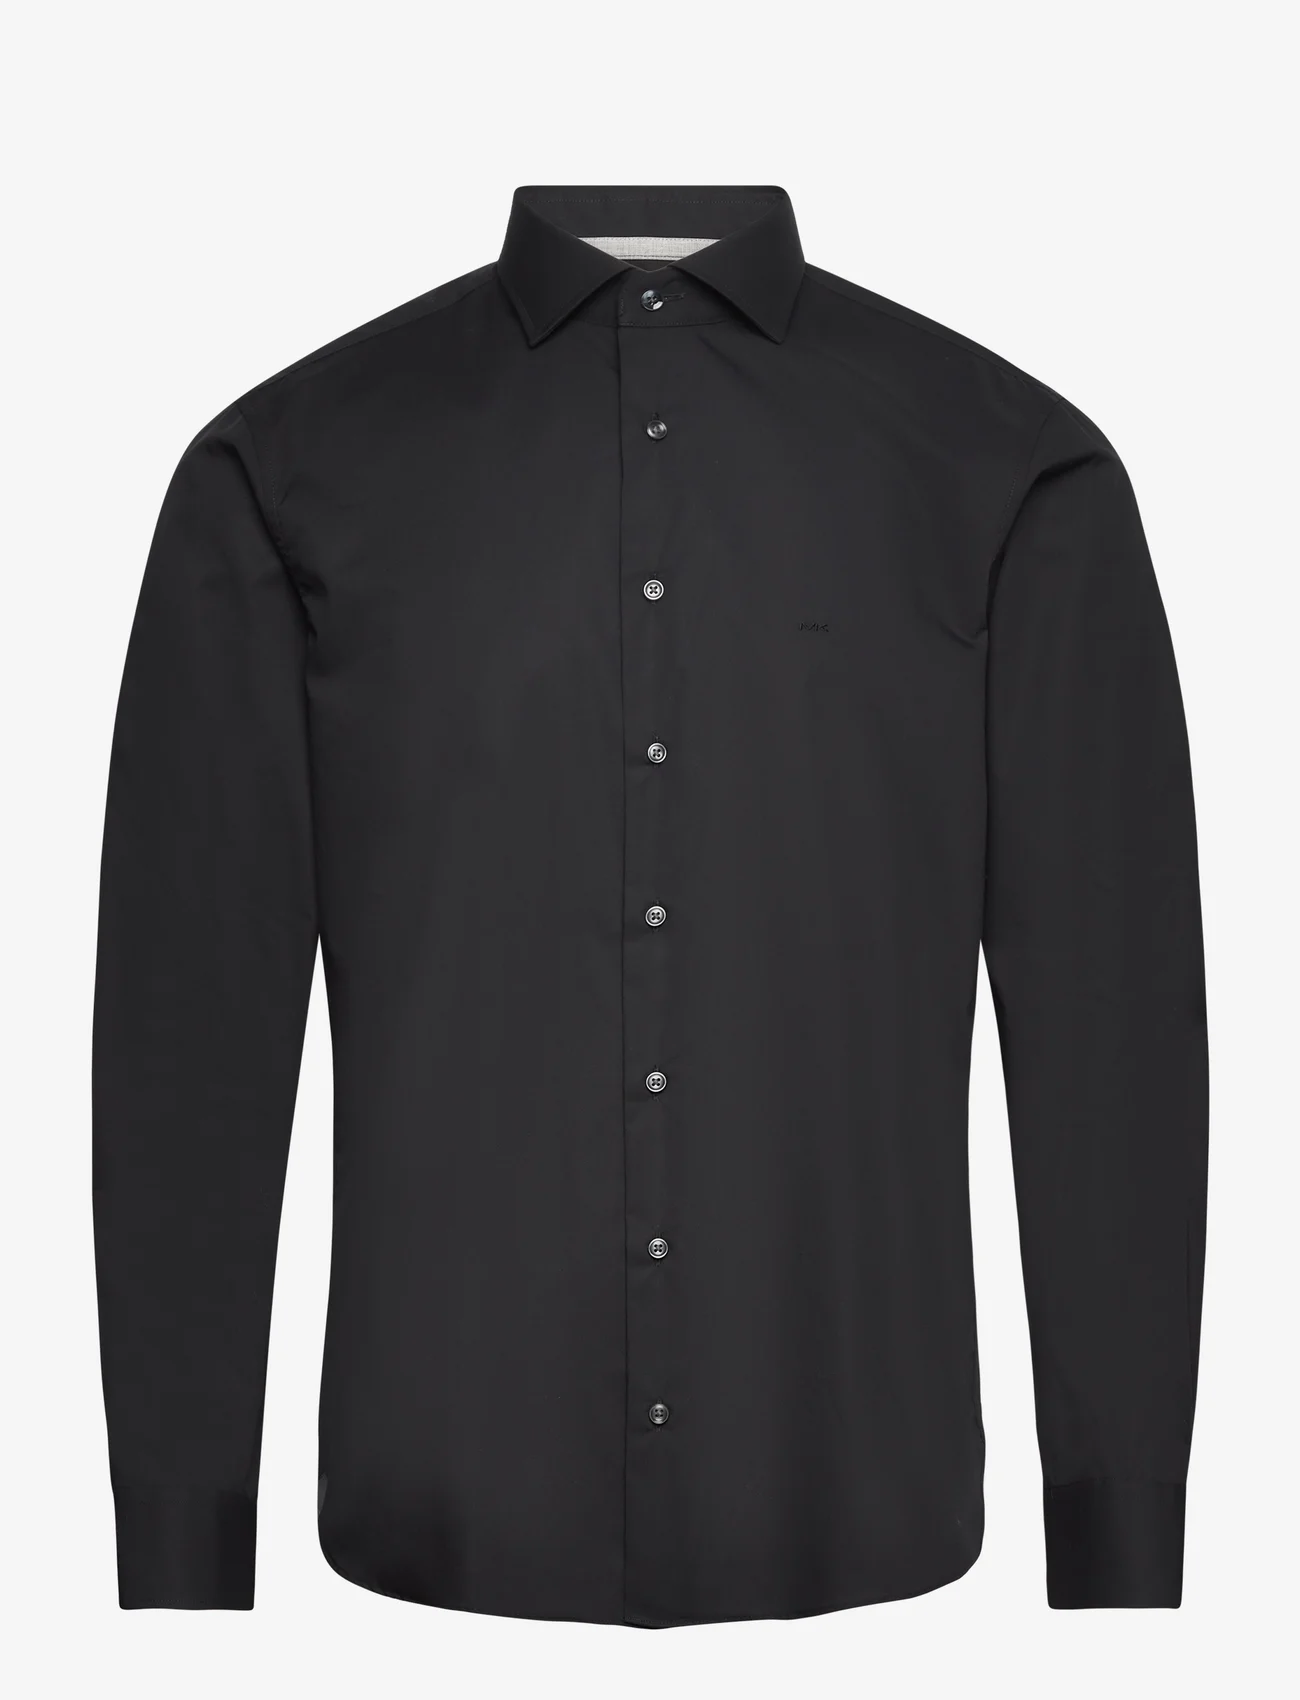 Michael Kors - POPLIN STRETCH MODERN SHIRT - basic shirts - black - 0